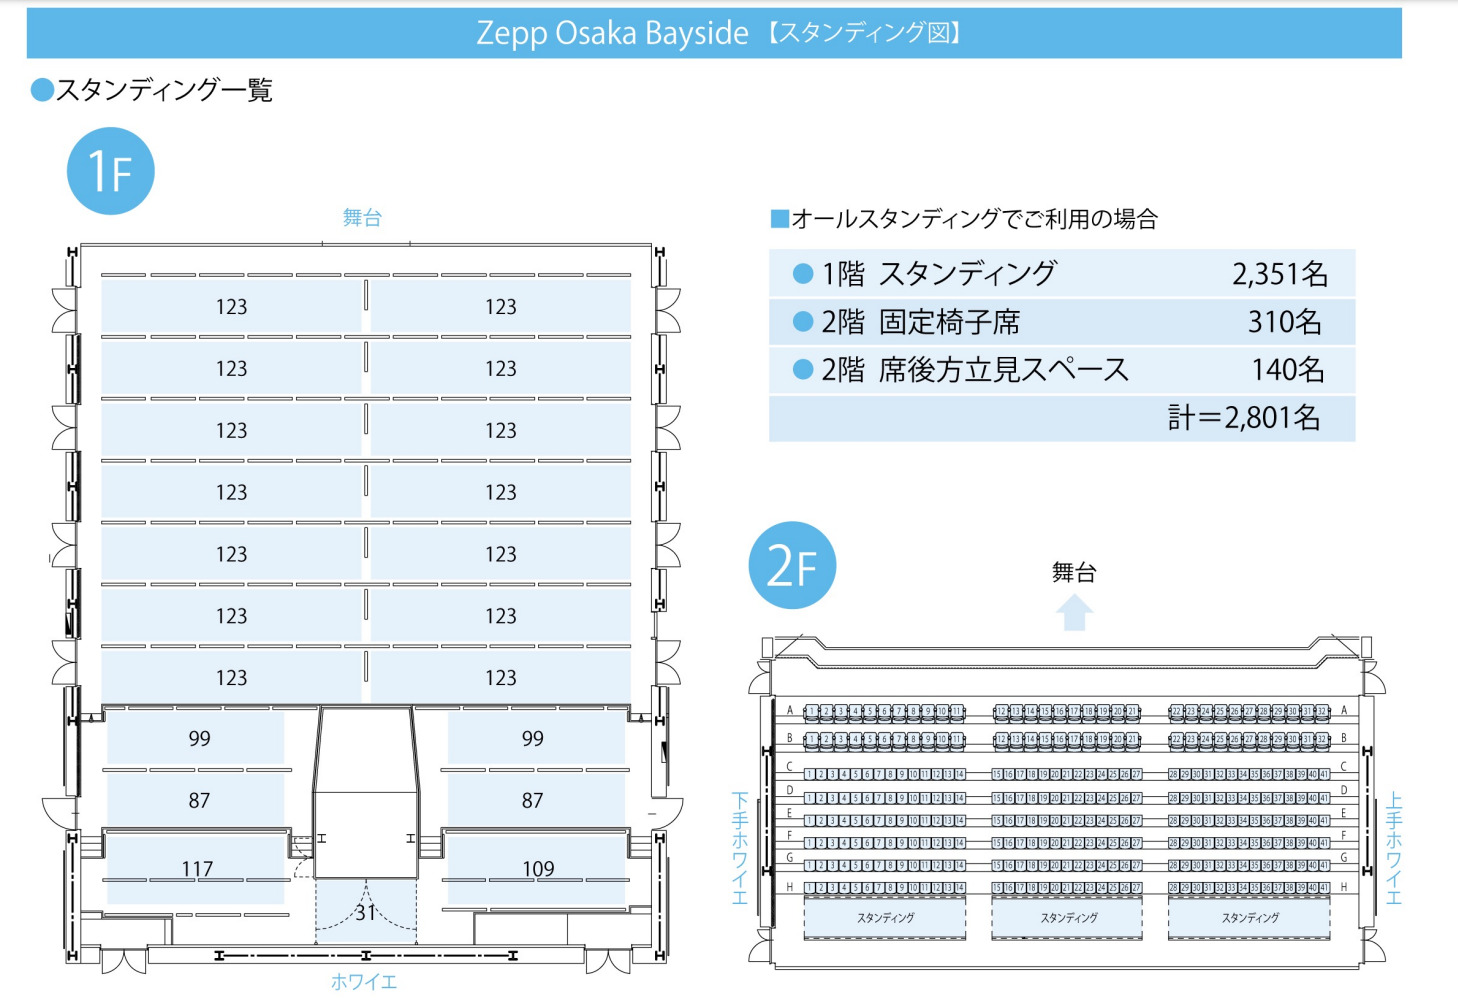 Zepp大阪ベイサイドの座席表(スタンディング時)